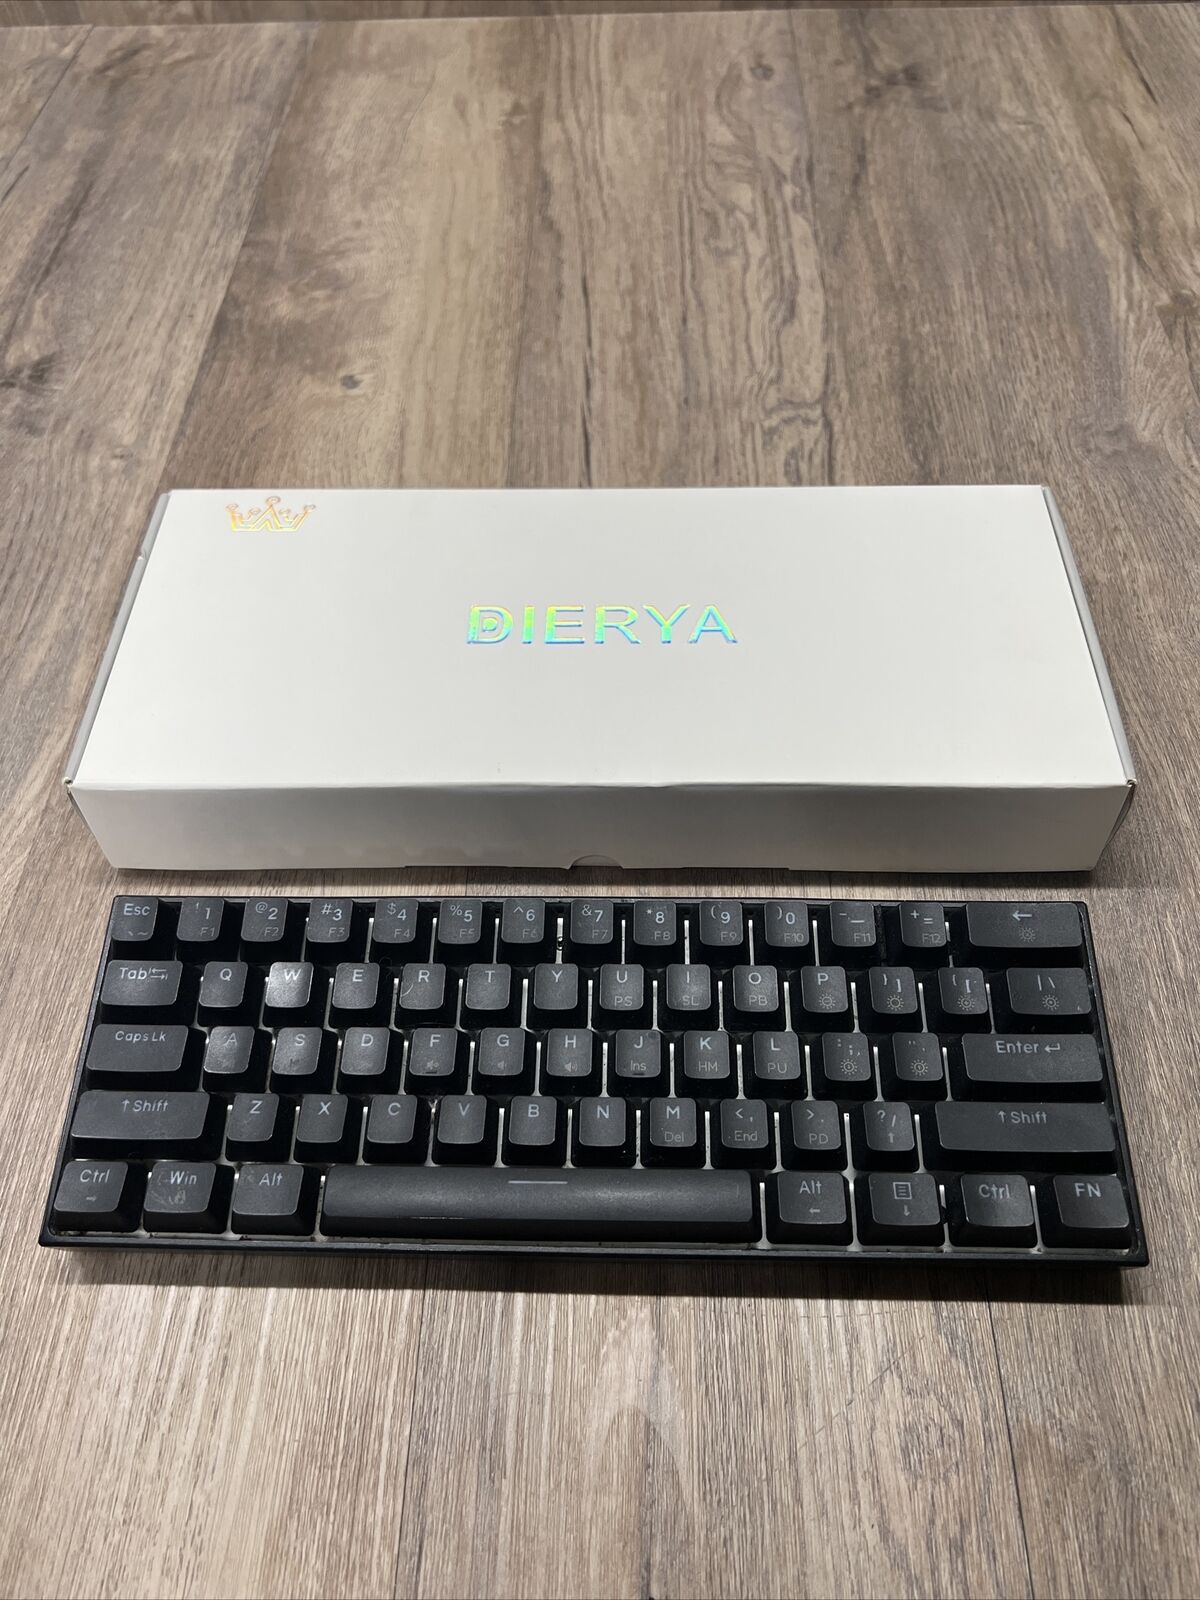 DIERYA DK61 Wired Mechanical Gaming Keyboard 60% True RGB Backlit LED for PC